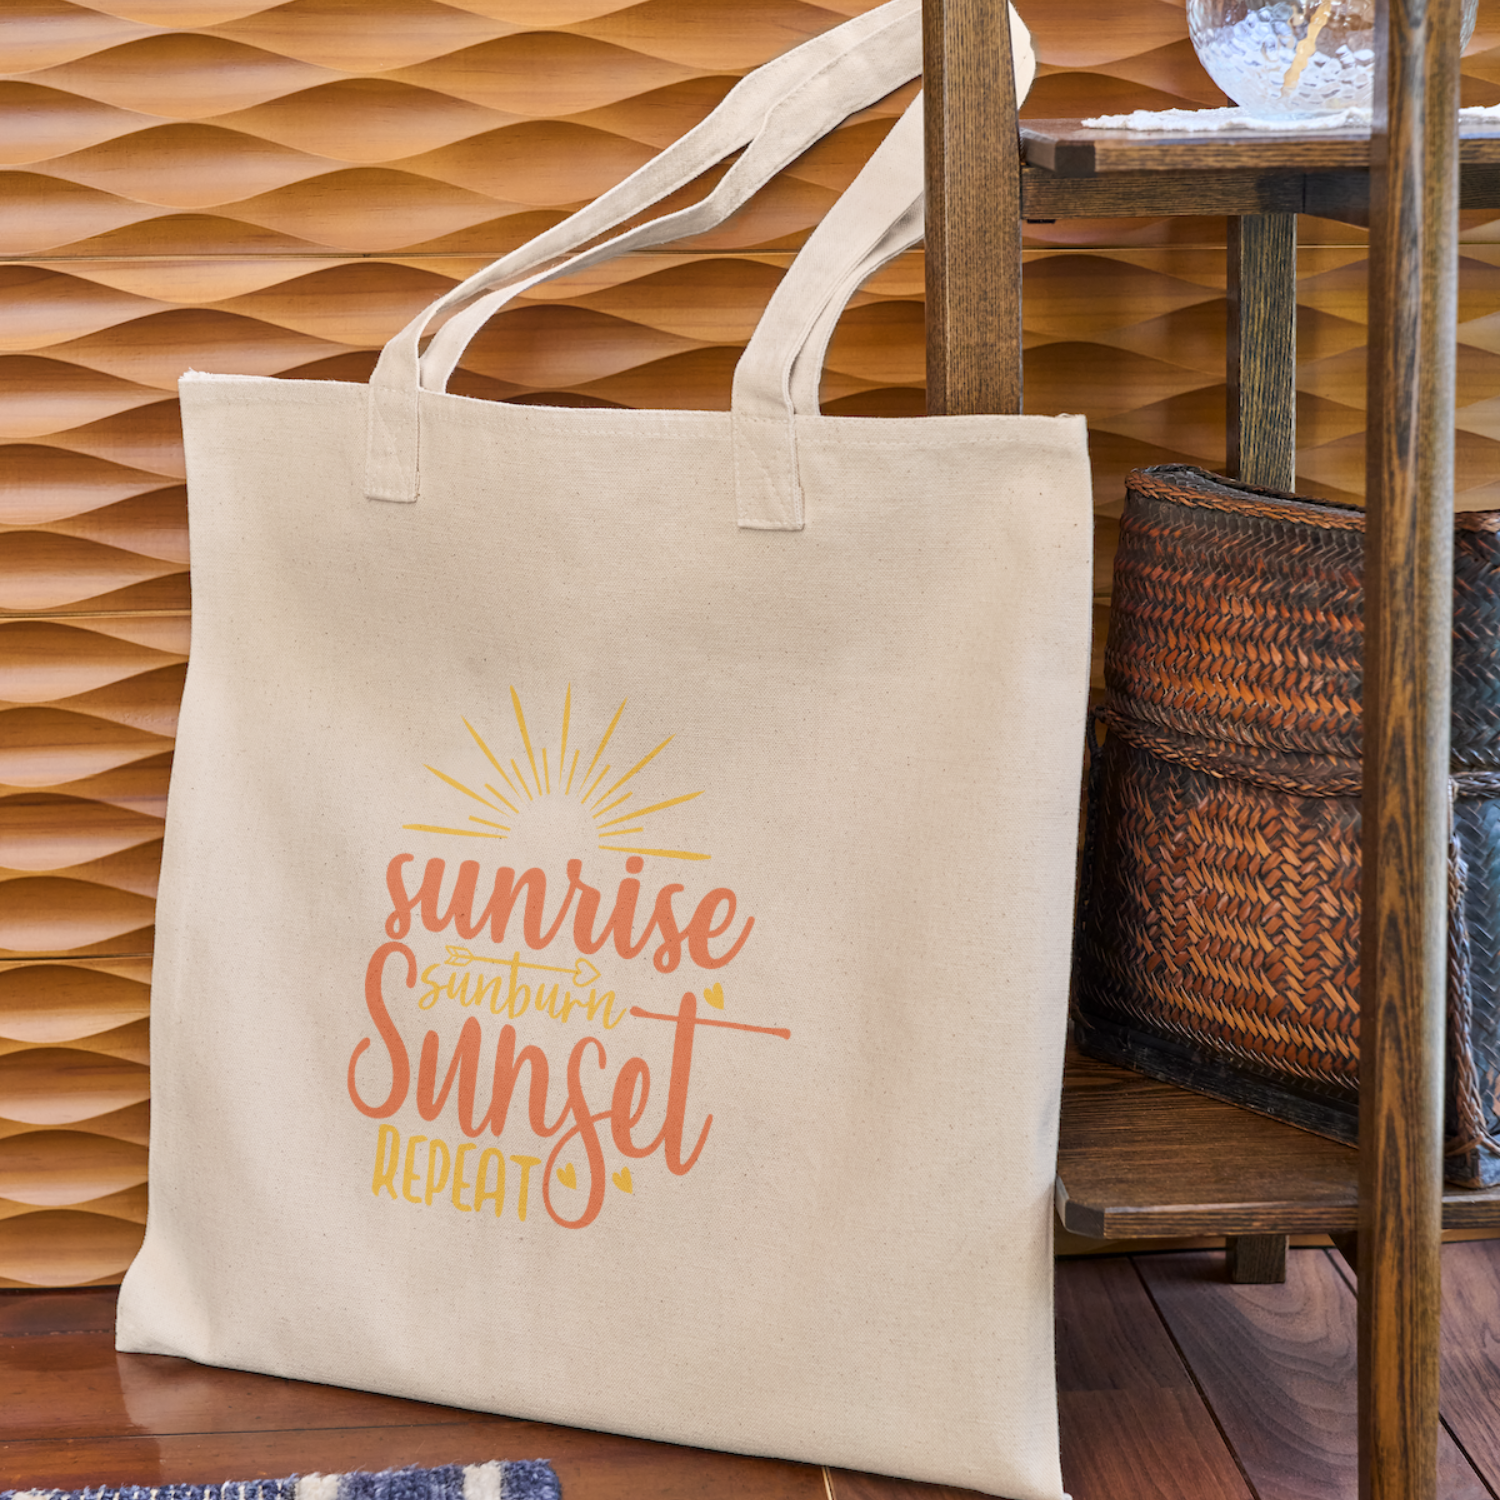 Sunrise sunburn sunset repeat | Digital Download | Cut File | SVG - Only The Sweet Stuff